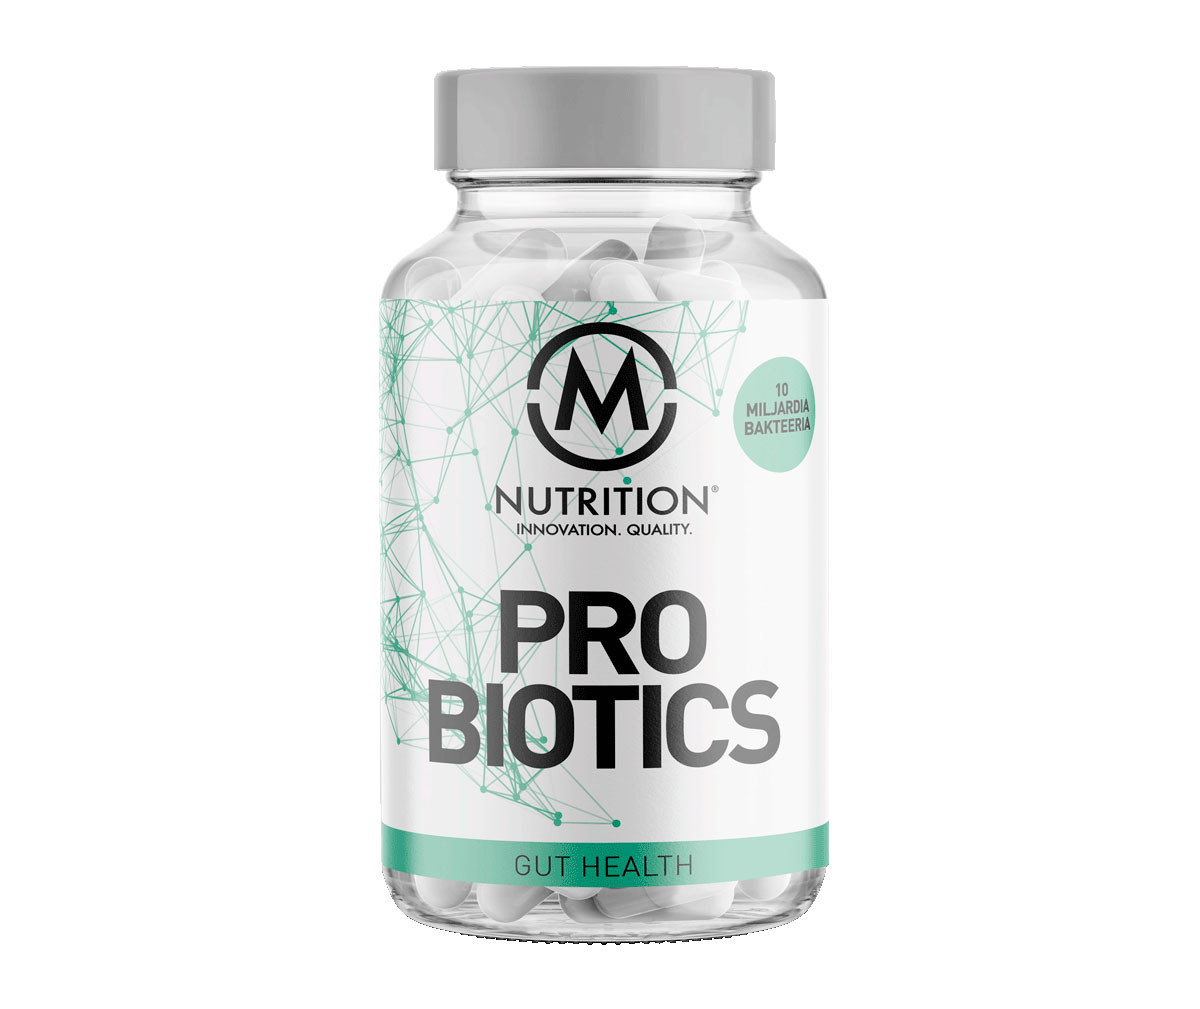 M-Nutrition Probiotics, 60 kaps.